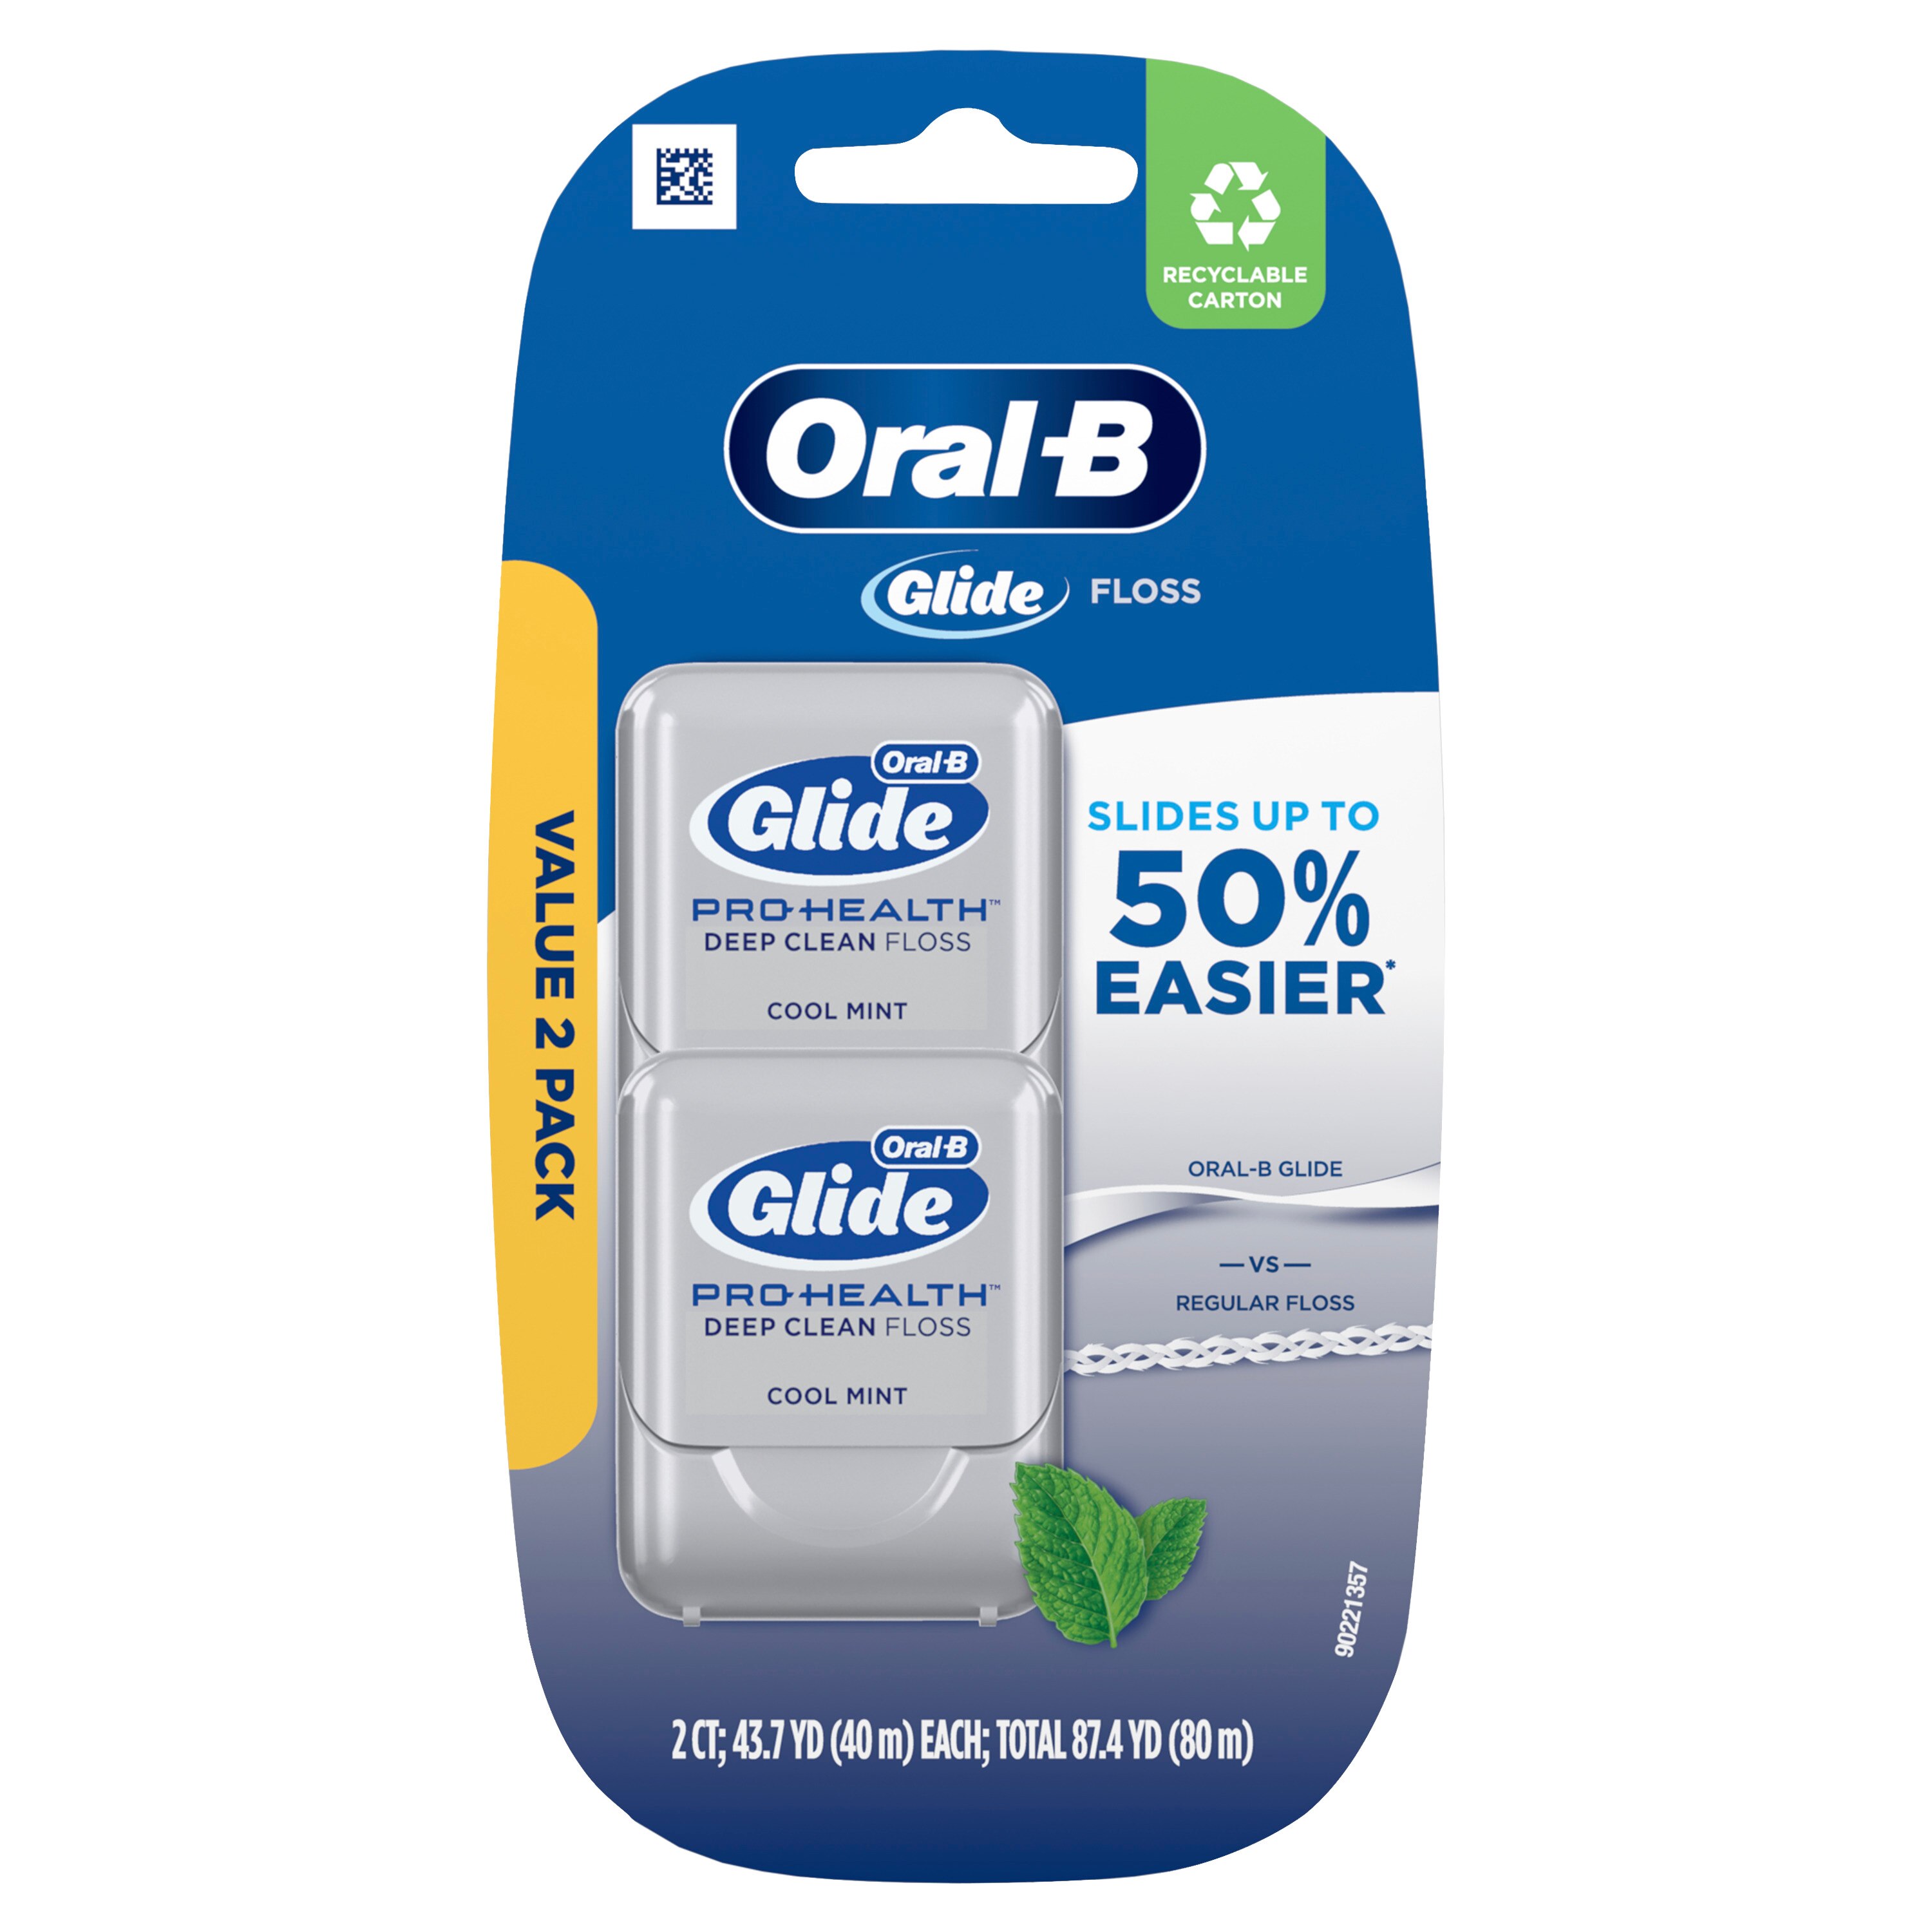 Oral-B Glide Pro-Health Deep Clean Floss, Cool Mint, 40 M, 2 Pack - 87.4 Yd , CVS